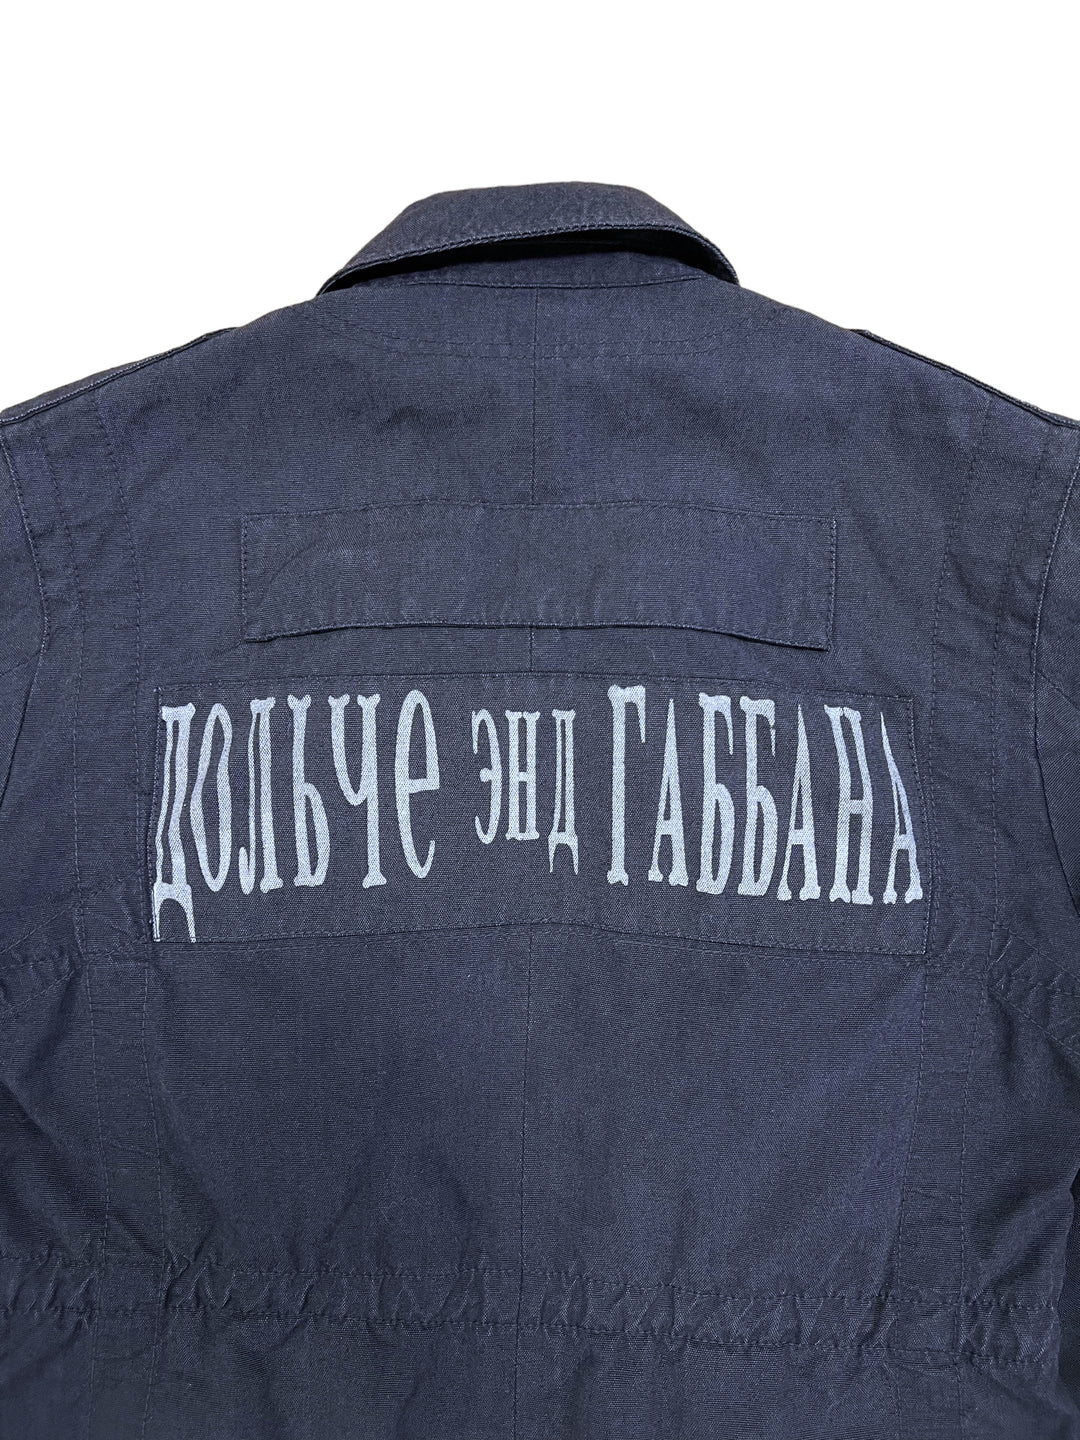 Dolce & Gabbana rare denim jacket Men’s Large